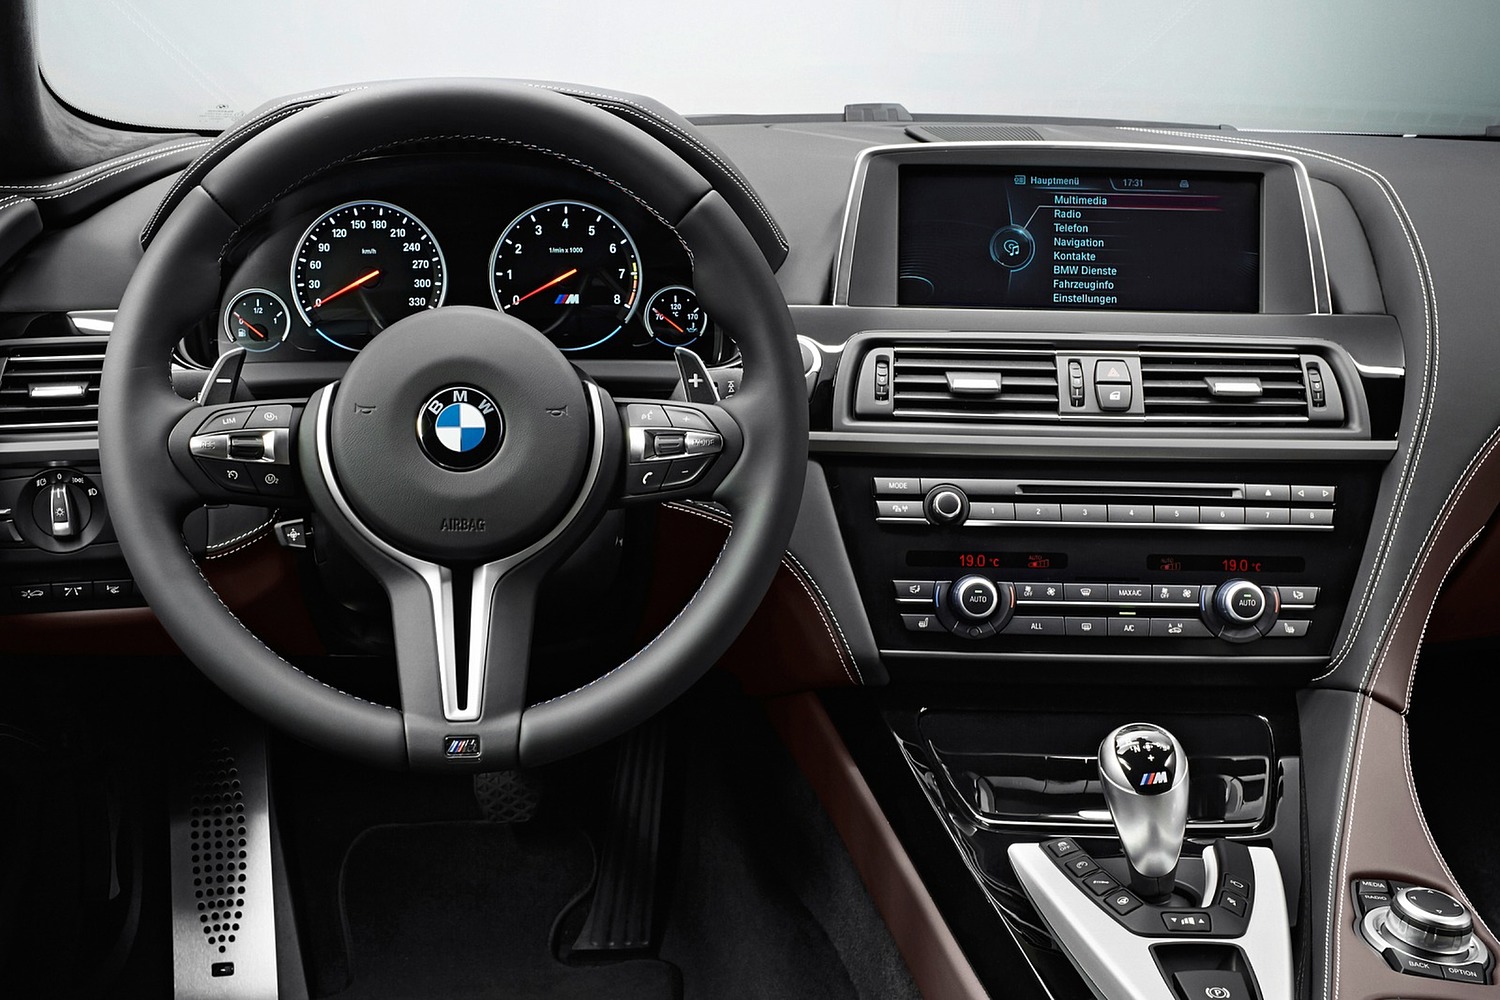 BMW M6 Gran Coupe Sedan Steering Wheel Detail (2017 model year shown)